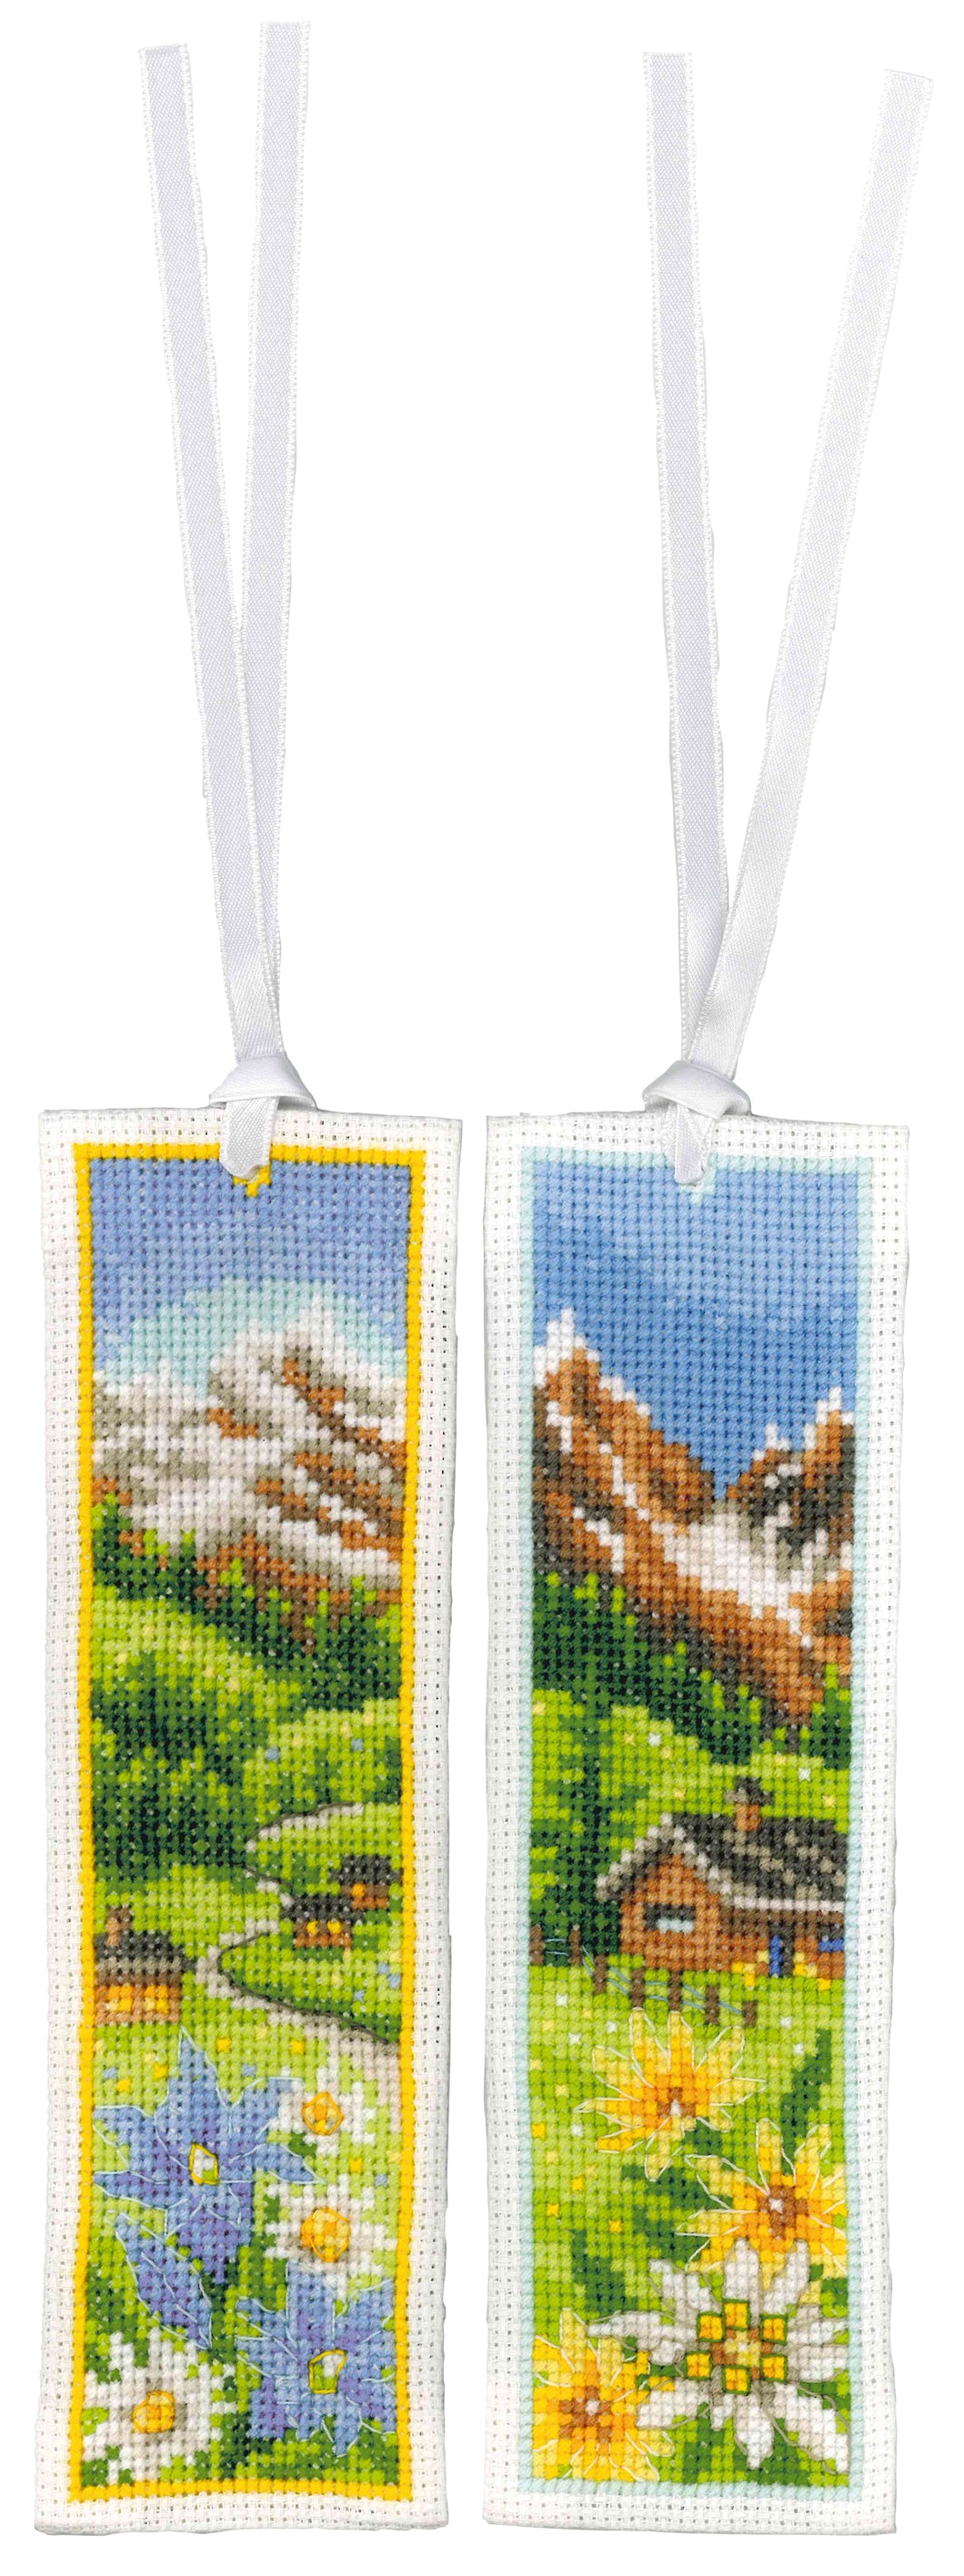 Alpine Meadow Bookmark Cross Stitch Kit - Vervaco